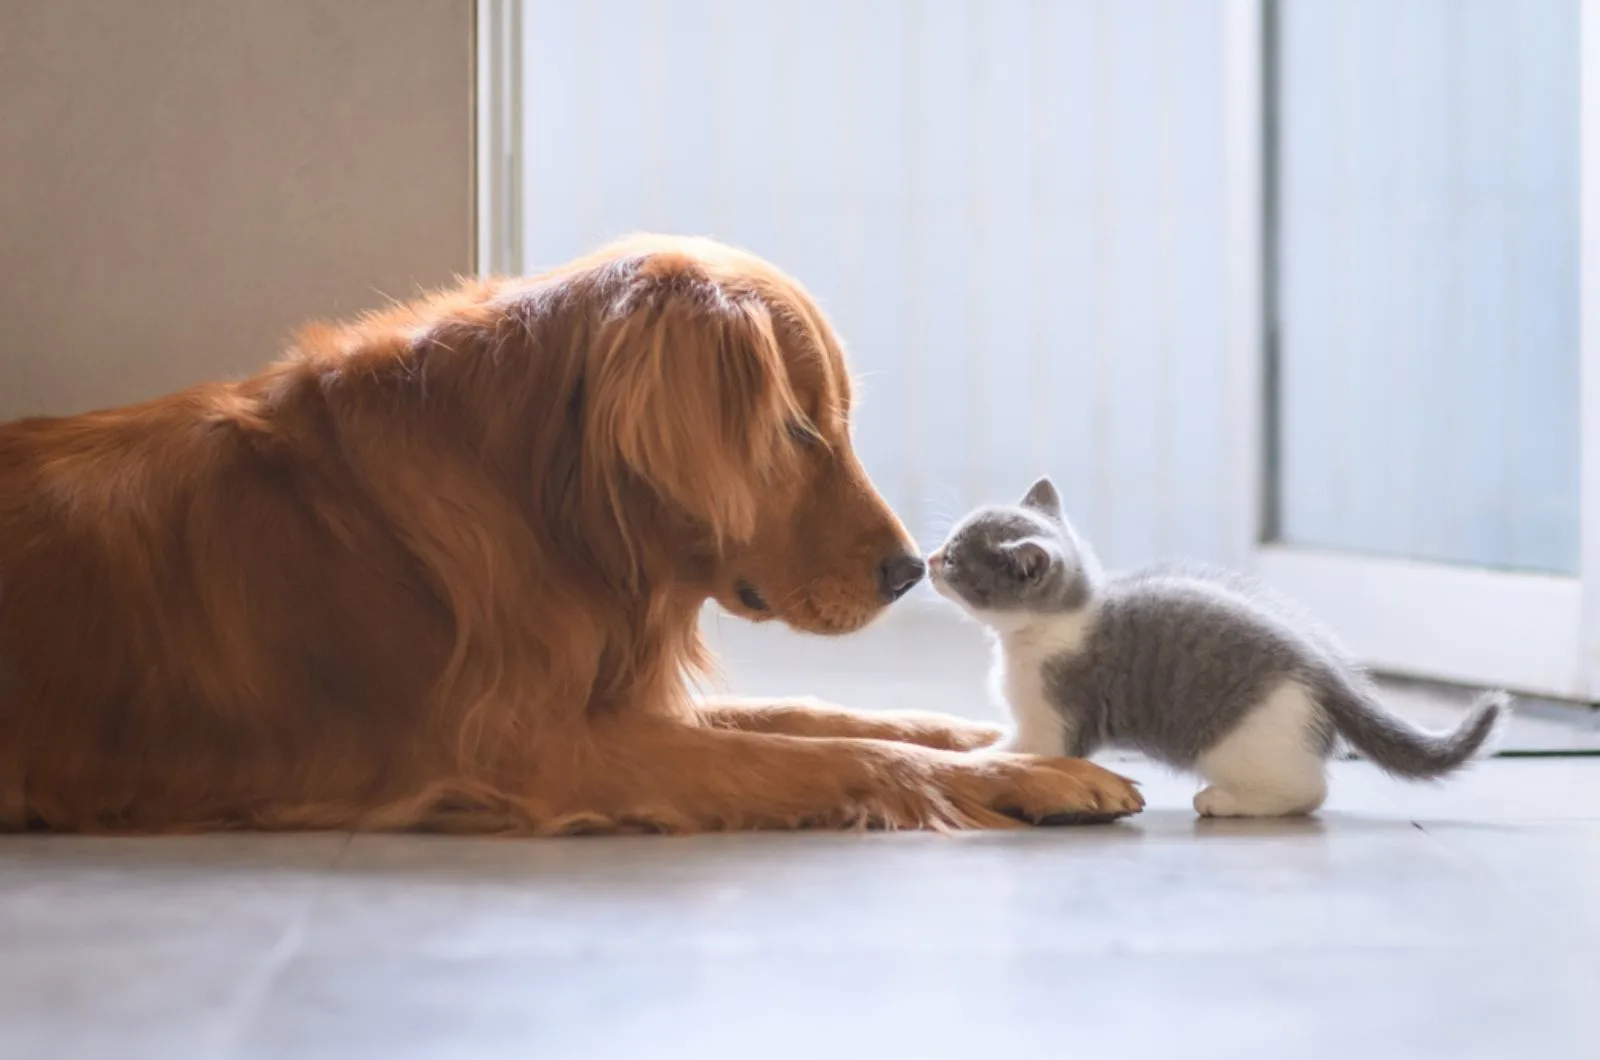 golden retriever and the kitten smell each other